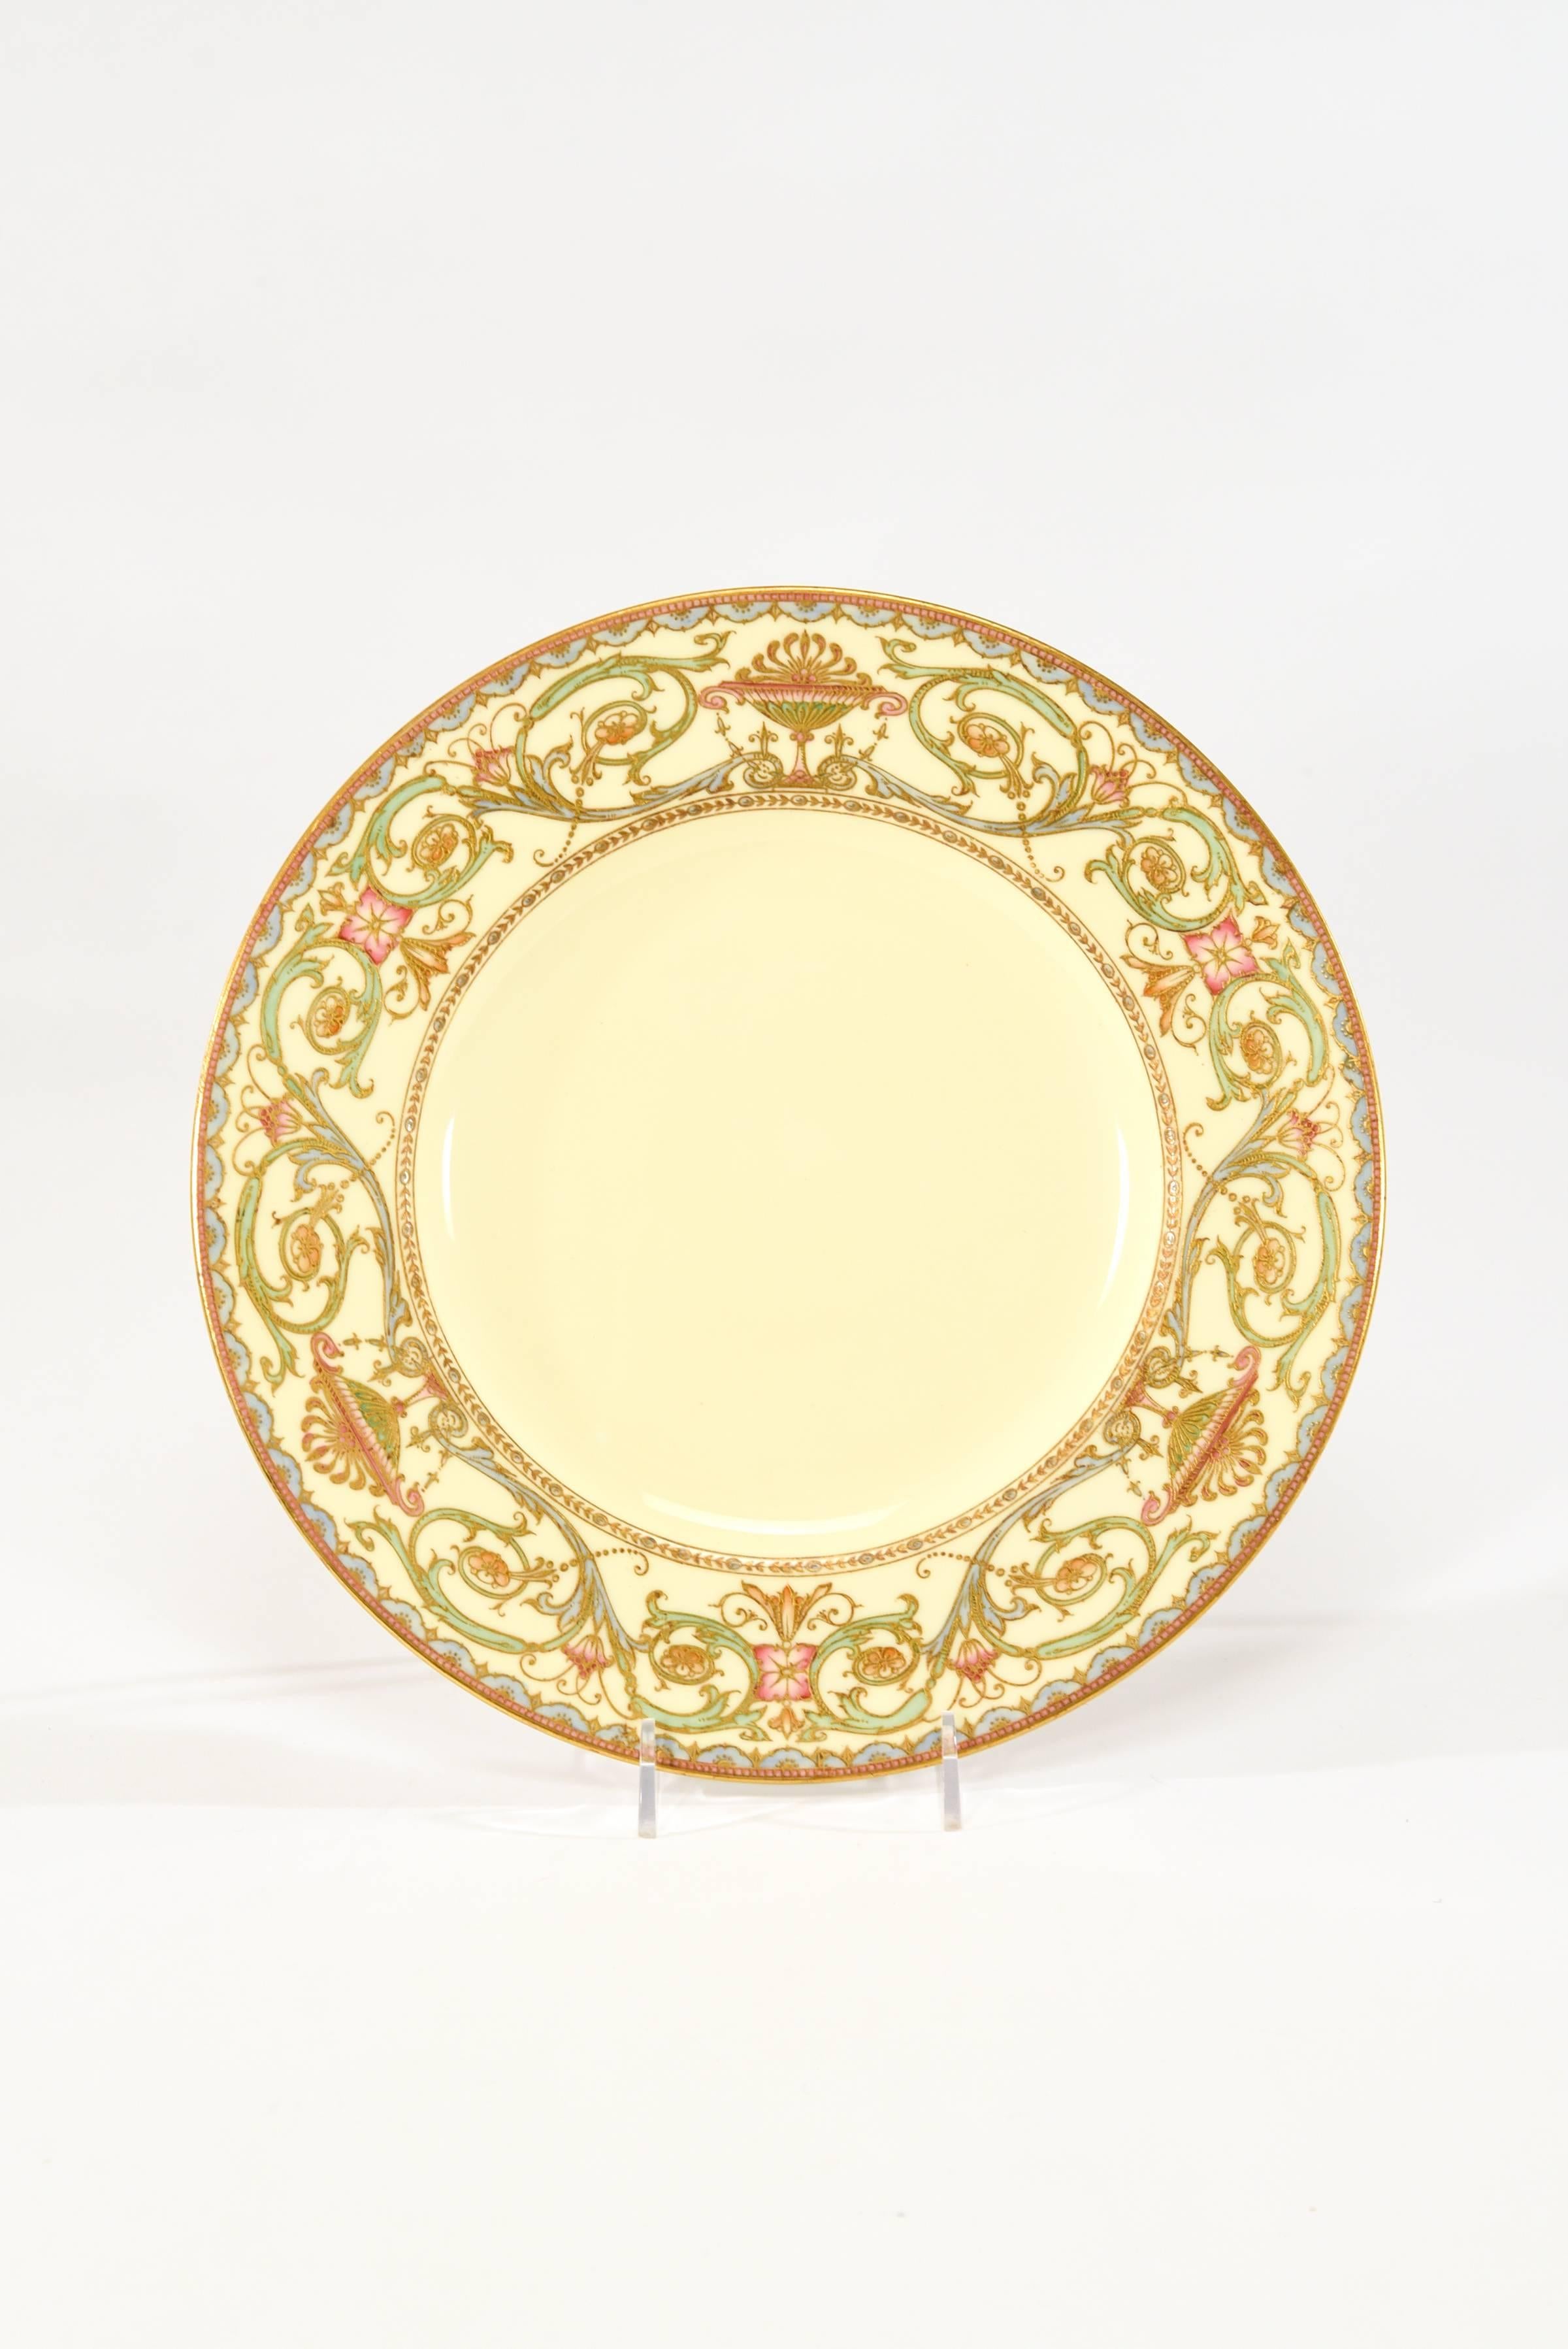 royal worcester plates